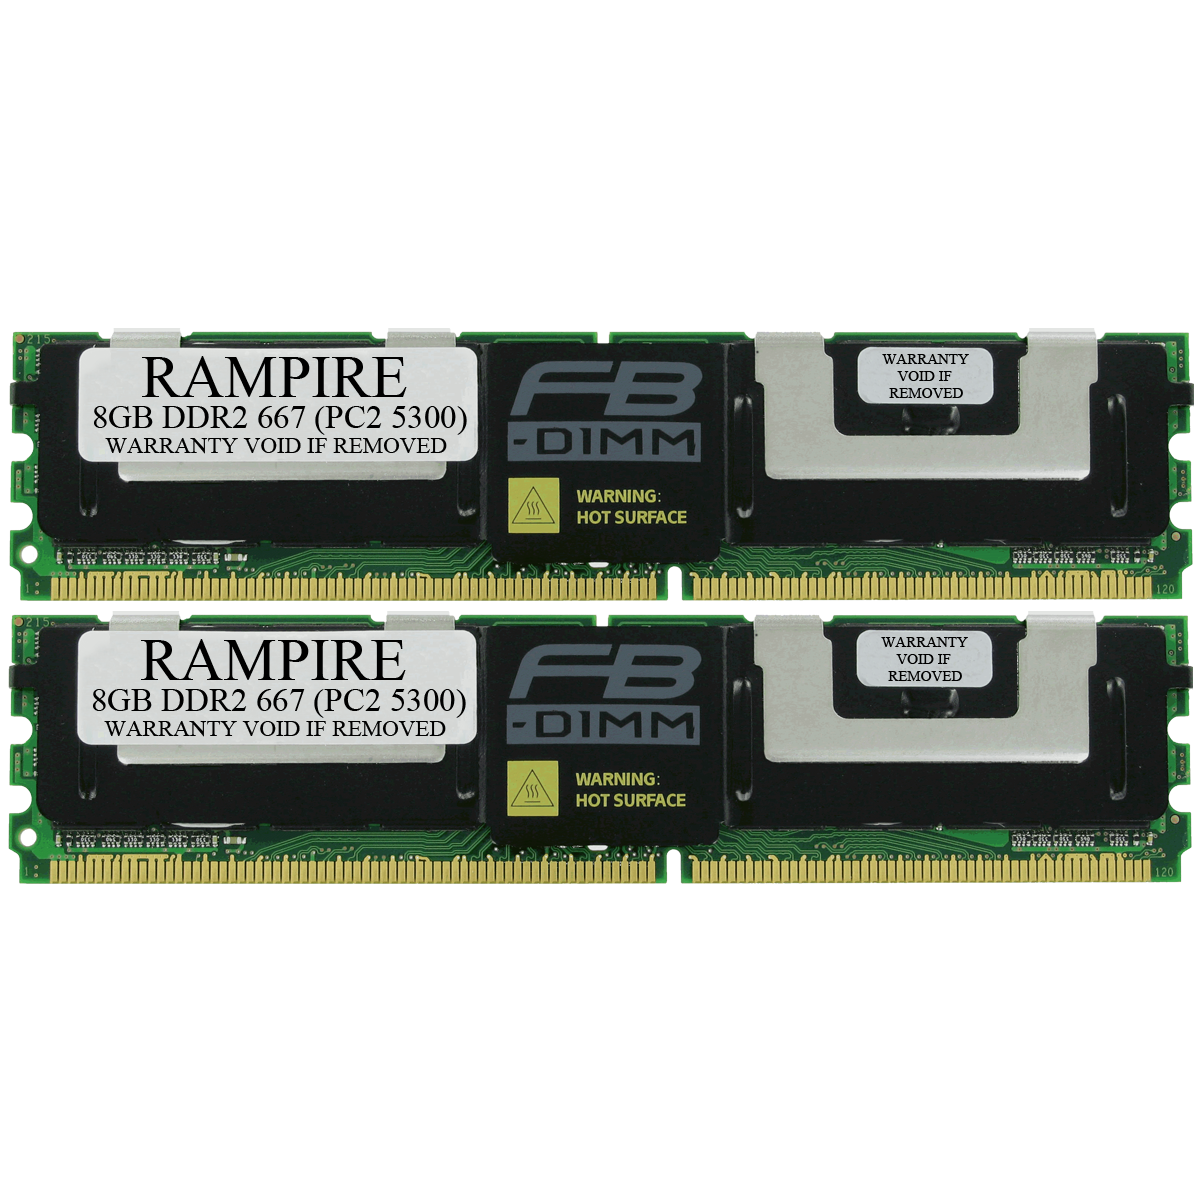 RAMPIRE 16GB (2 x 8GB) DDR2 667 (PC2 5300) 240-Pin SDRAM 4Rx4 Standard Profile 1.8V ECC Fully Buffered Server Memory